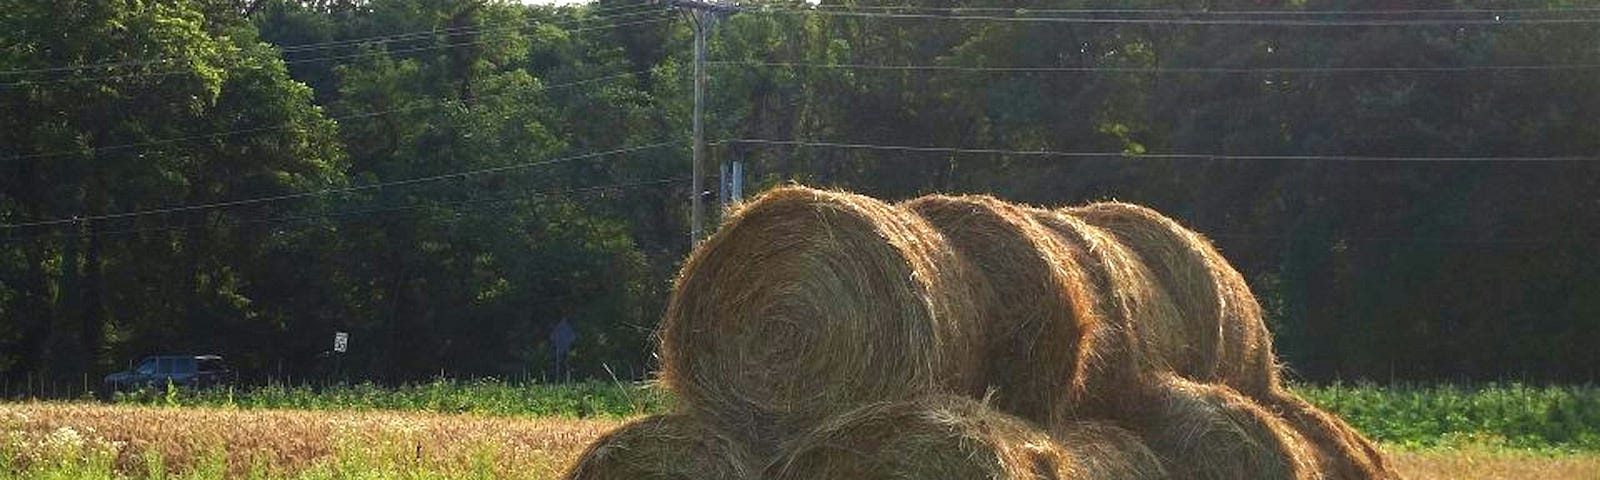 haystack in a field of green